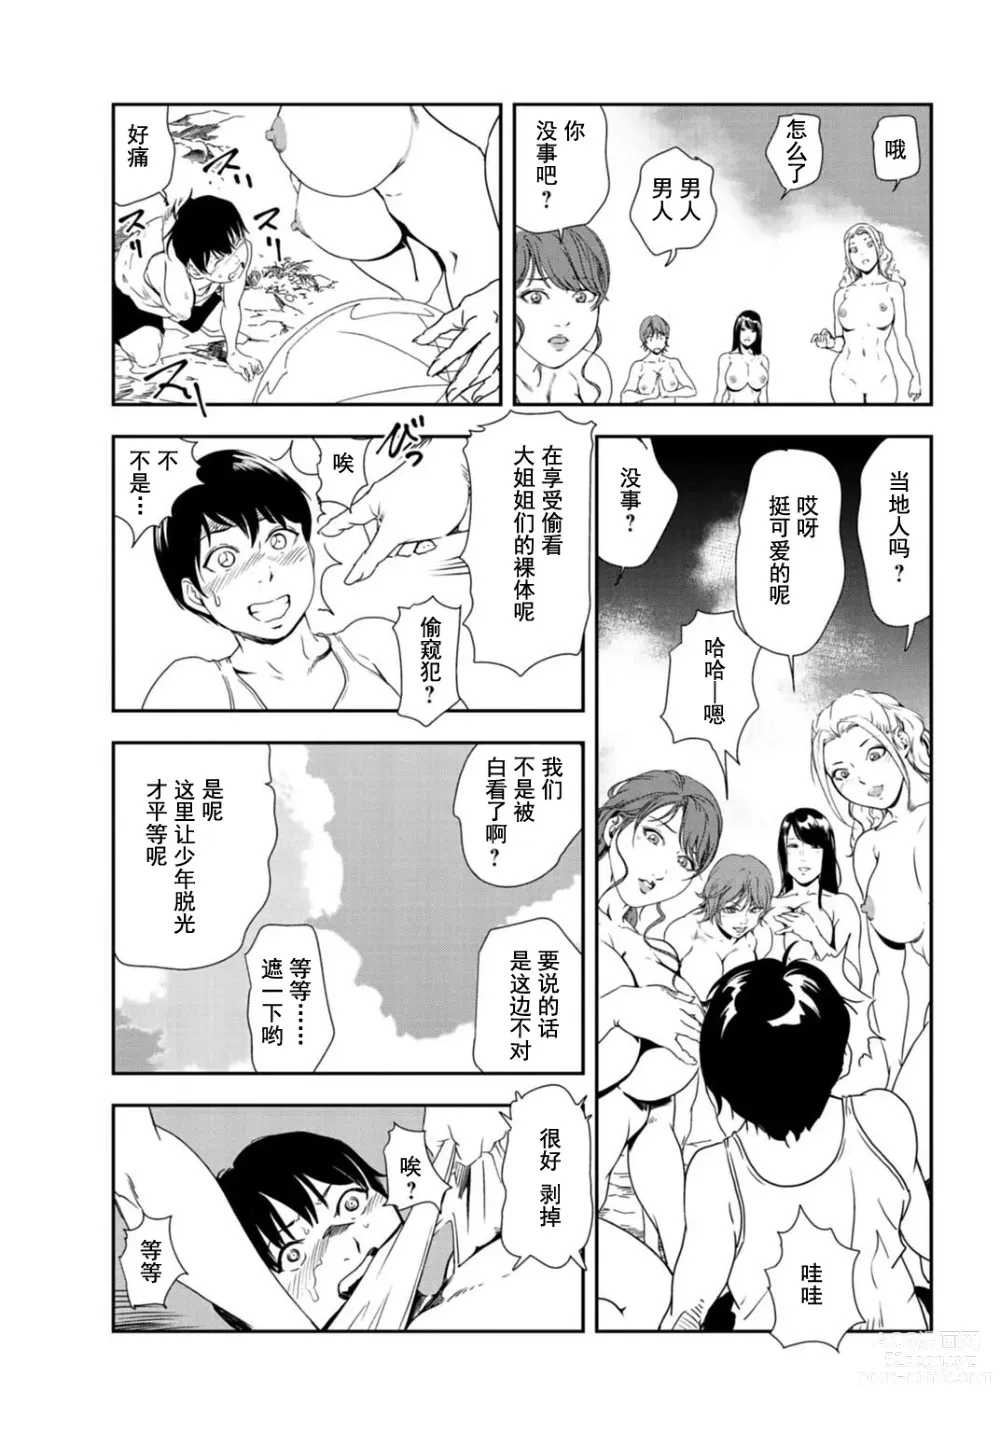 Page 7 of manga Nikuhisyo Yukiko #92